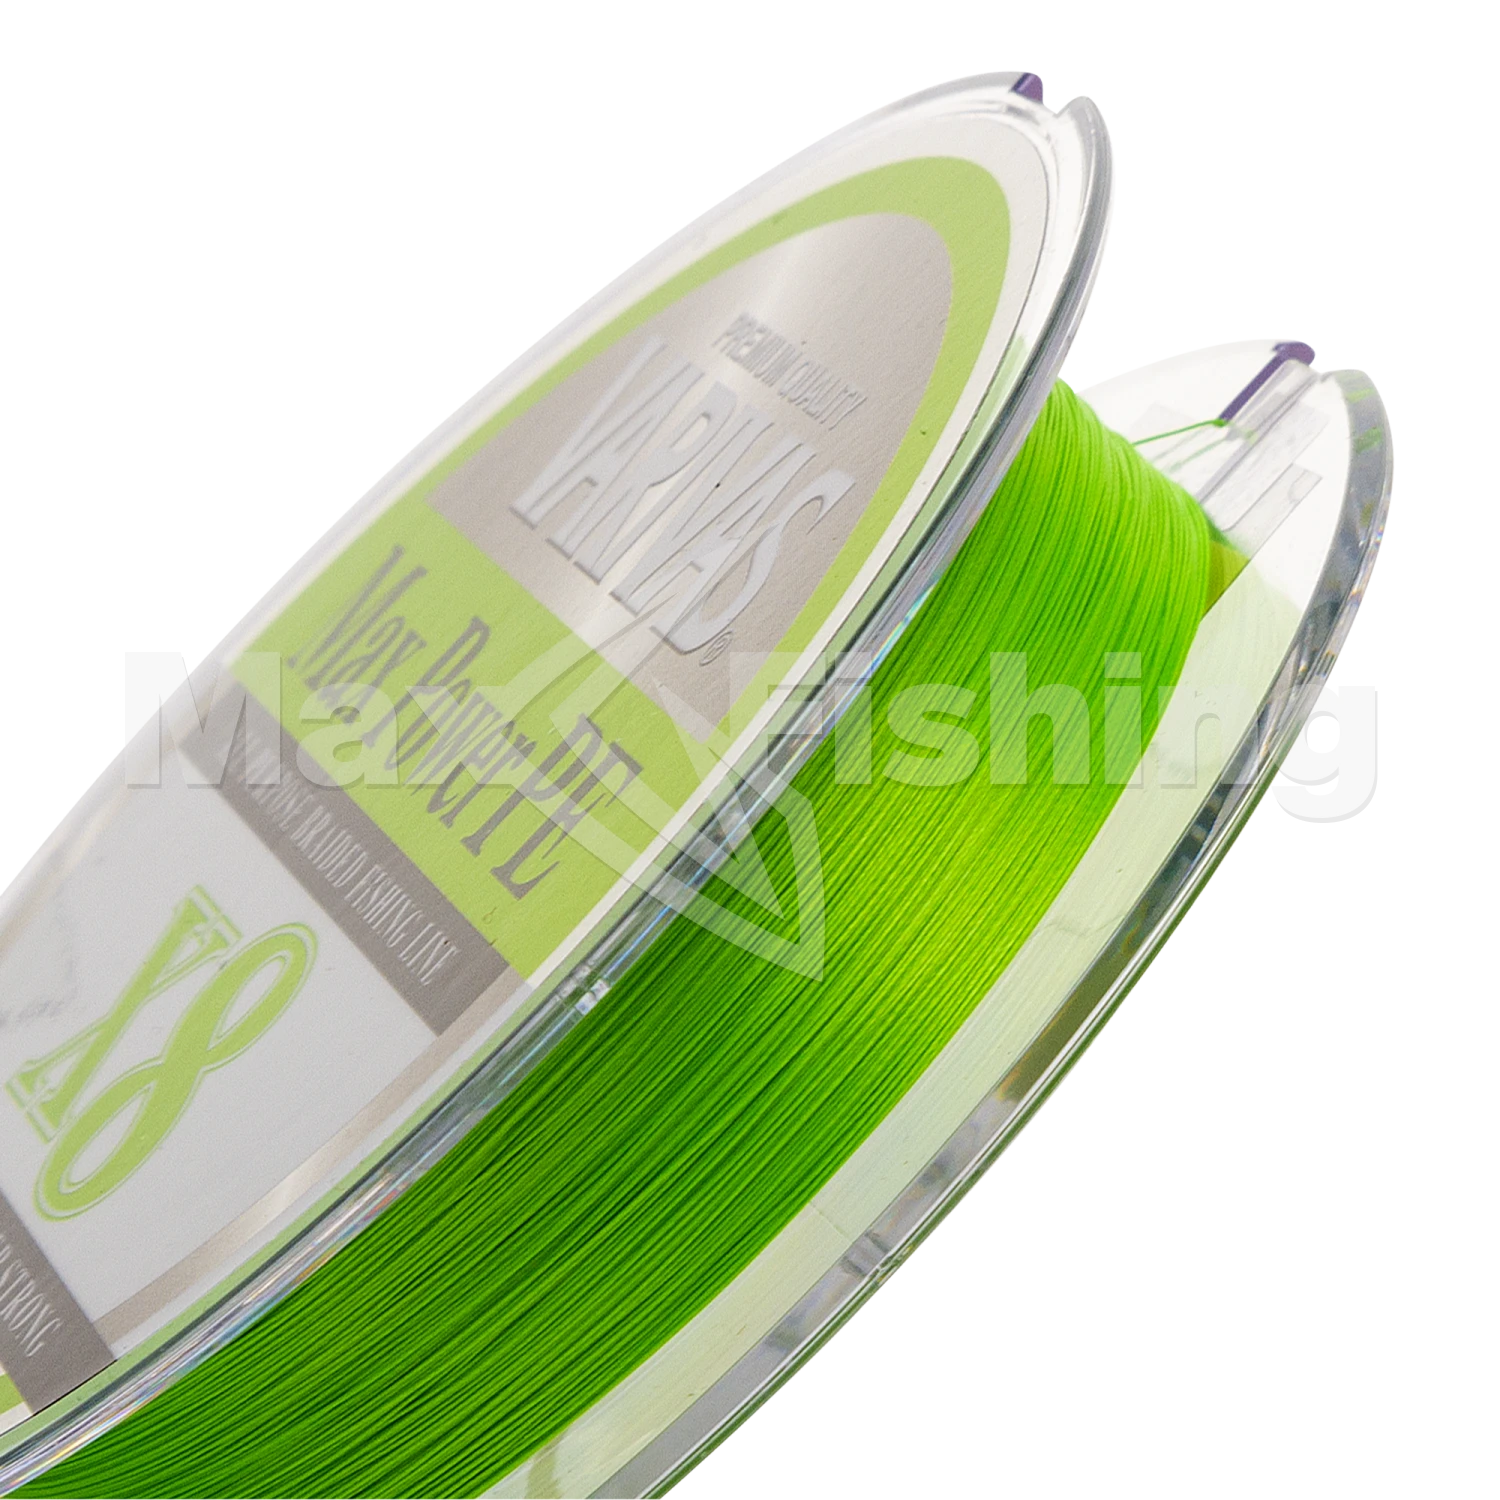 Шнур плетеный Varivas Max Power PE X8 #1,5 0,205мм 200м (lime green)